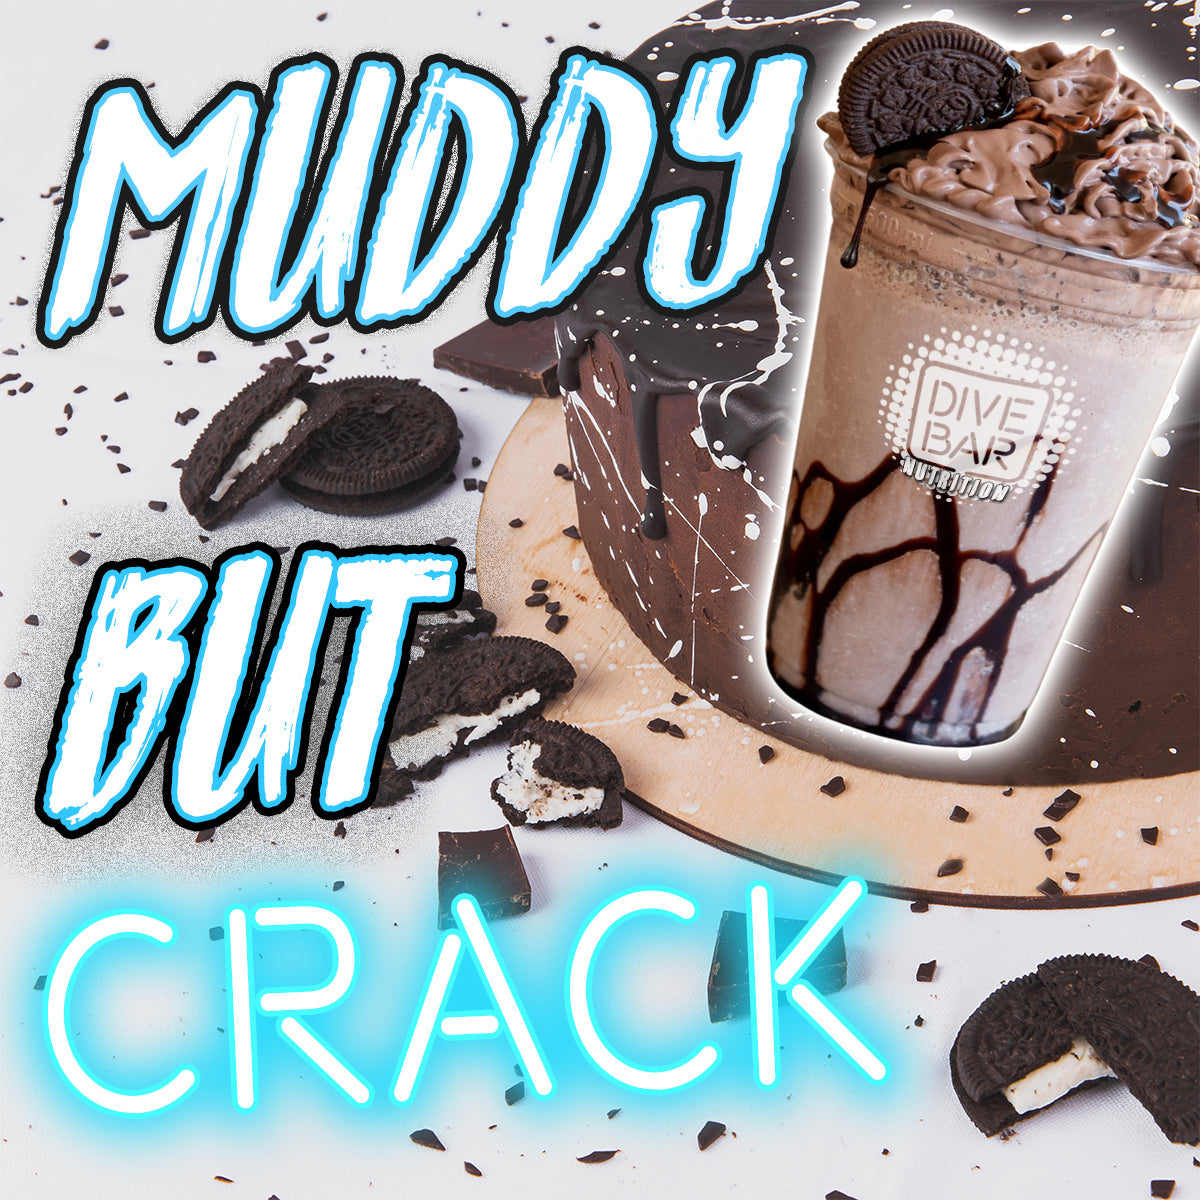 MUDDY BUT CRACK - 6 bars